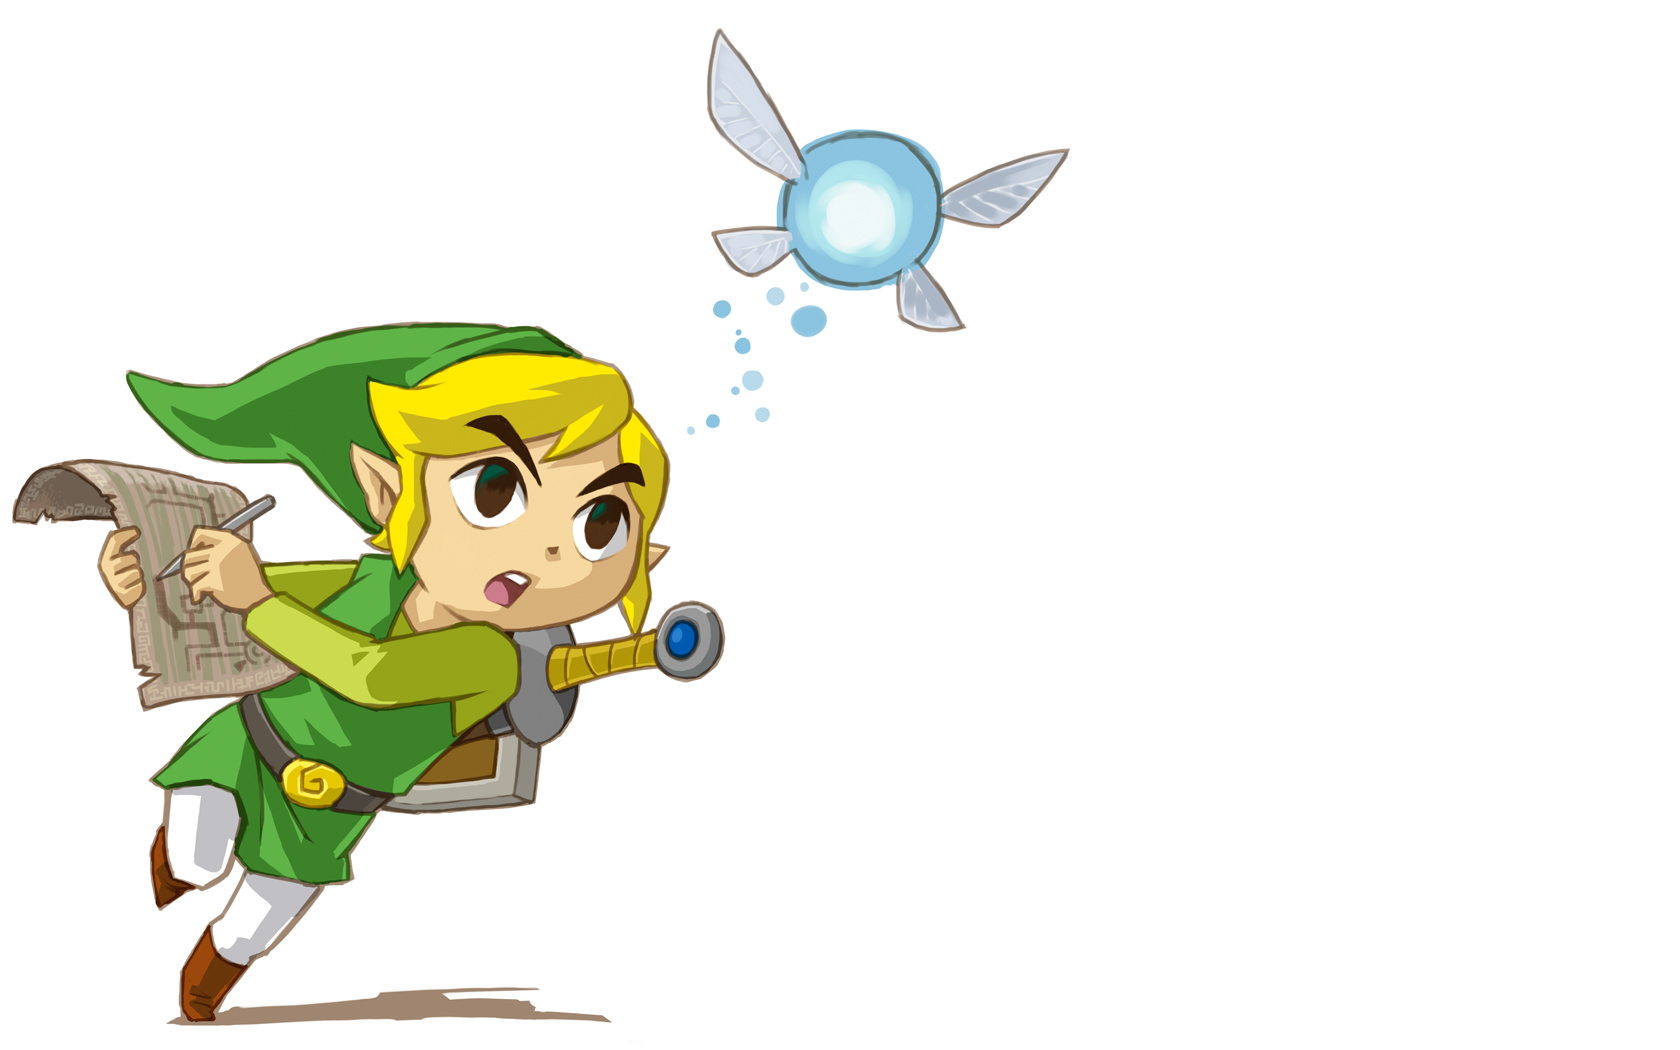 Video Game The Legend of Zelda: Phantom Hourglass HD Wallpaper | Background Image